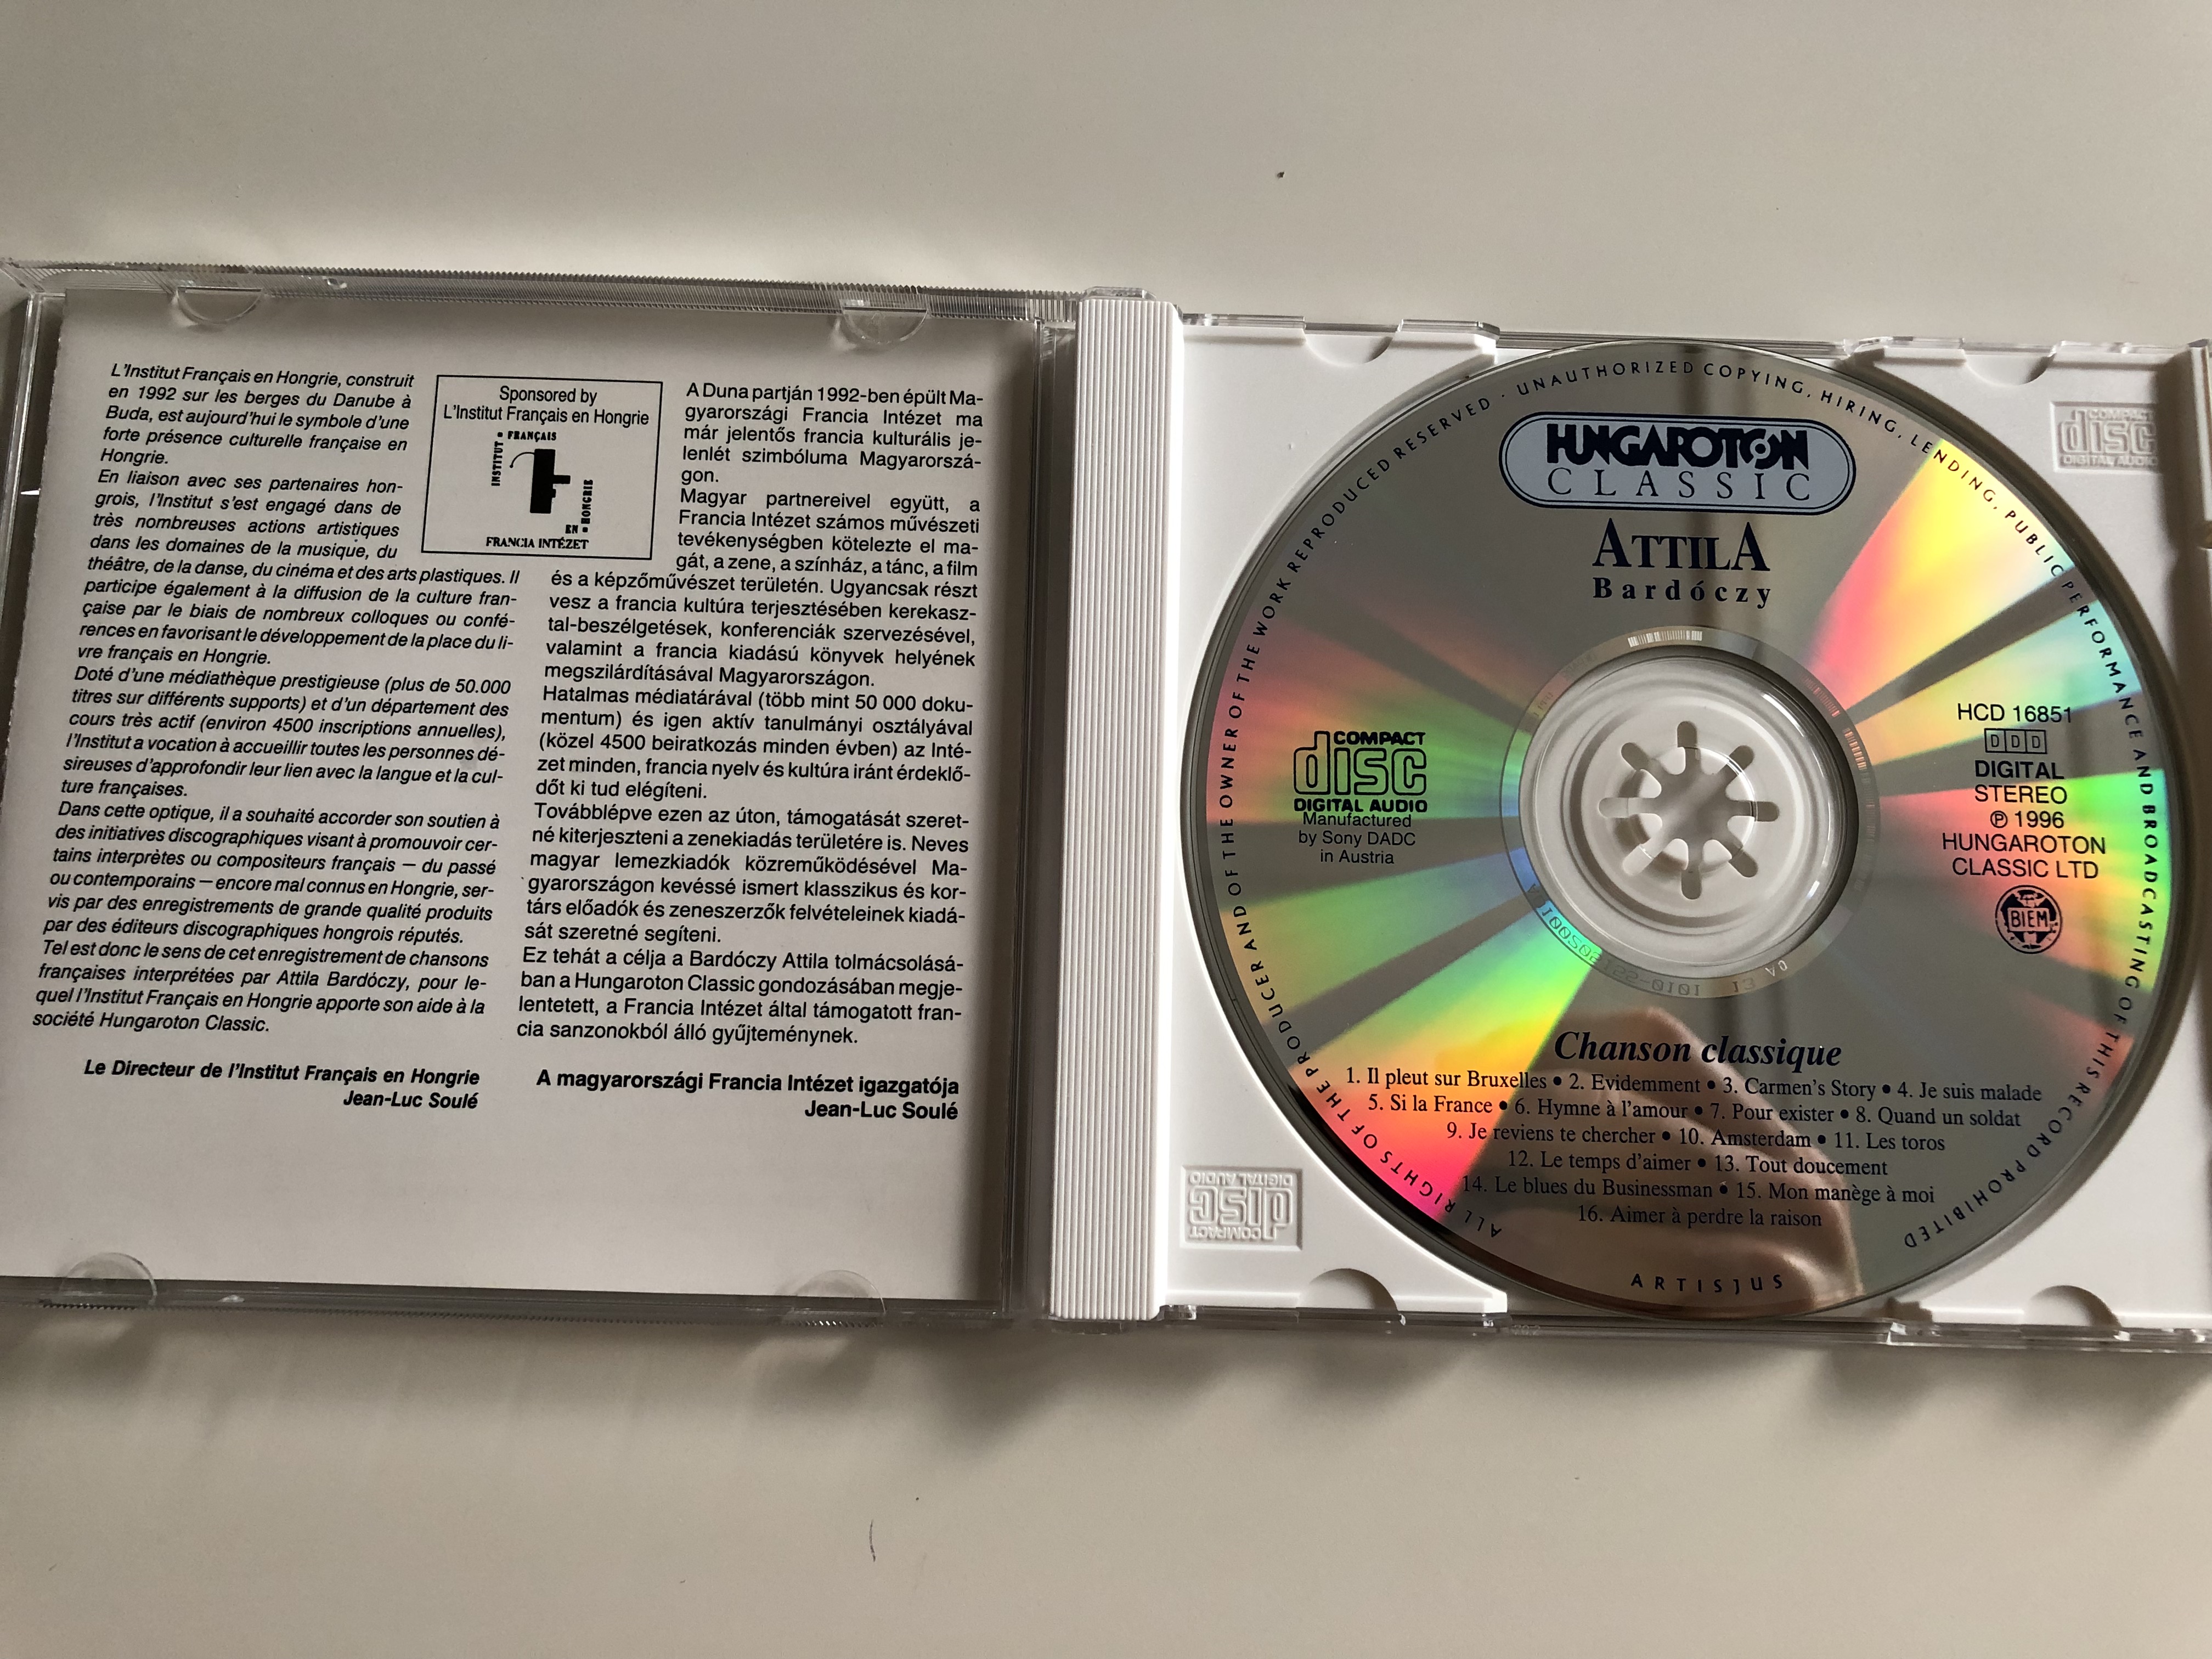 attila-b-rd-czy-chanson-classique-hungaroton-classic-audio-cd-1996-hcd-16851-5-.jpg